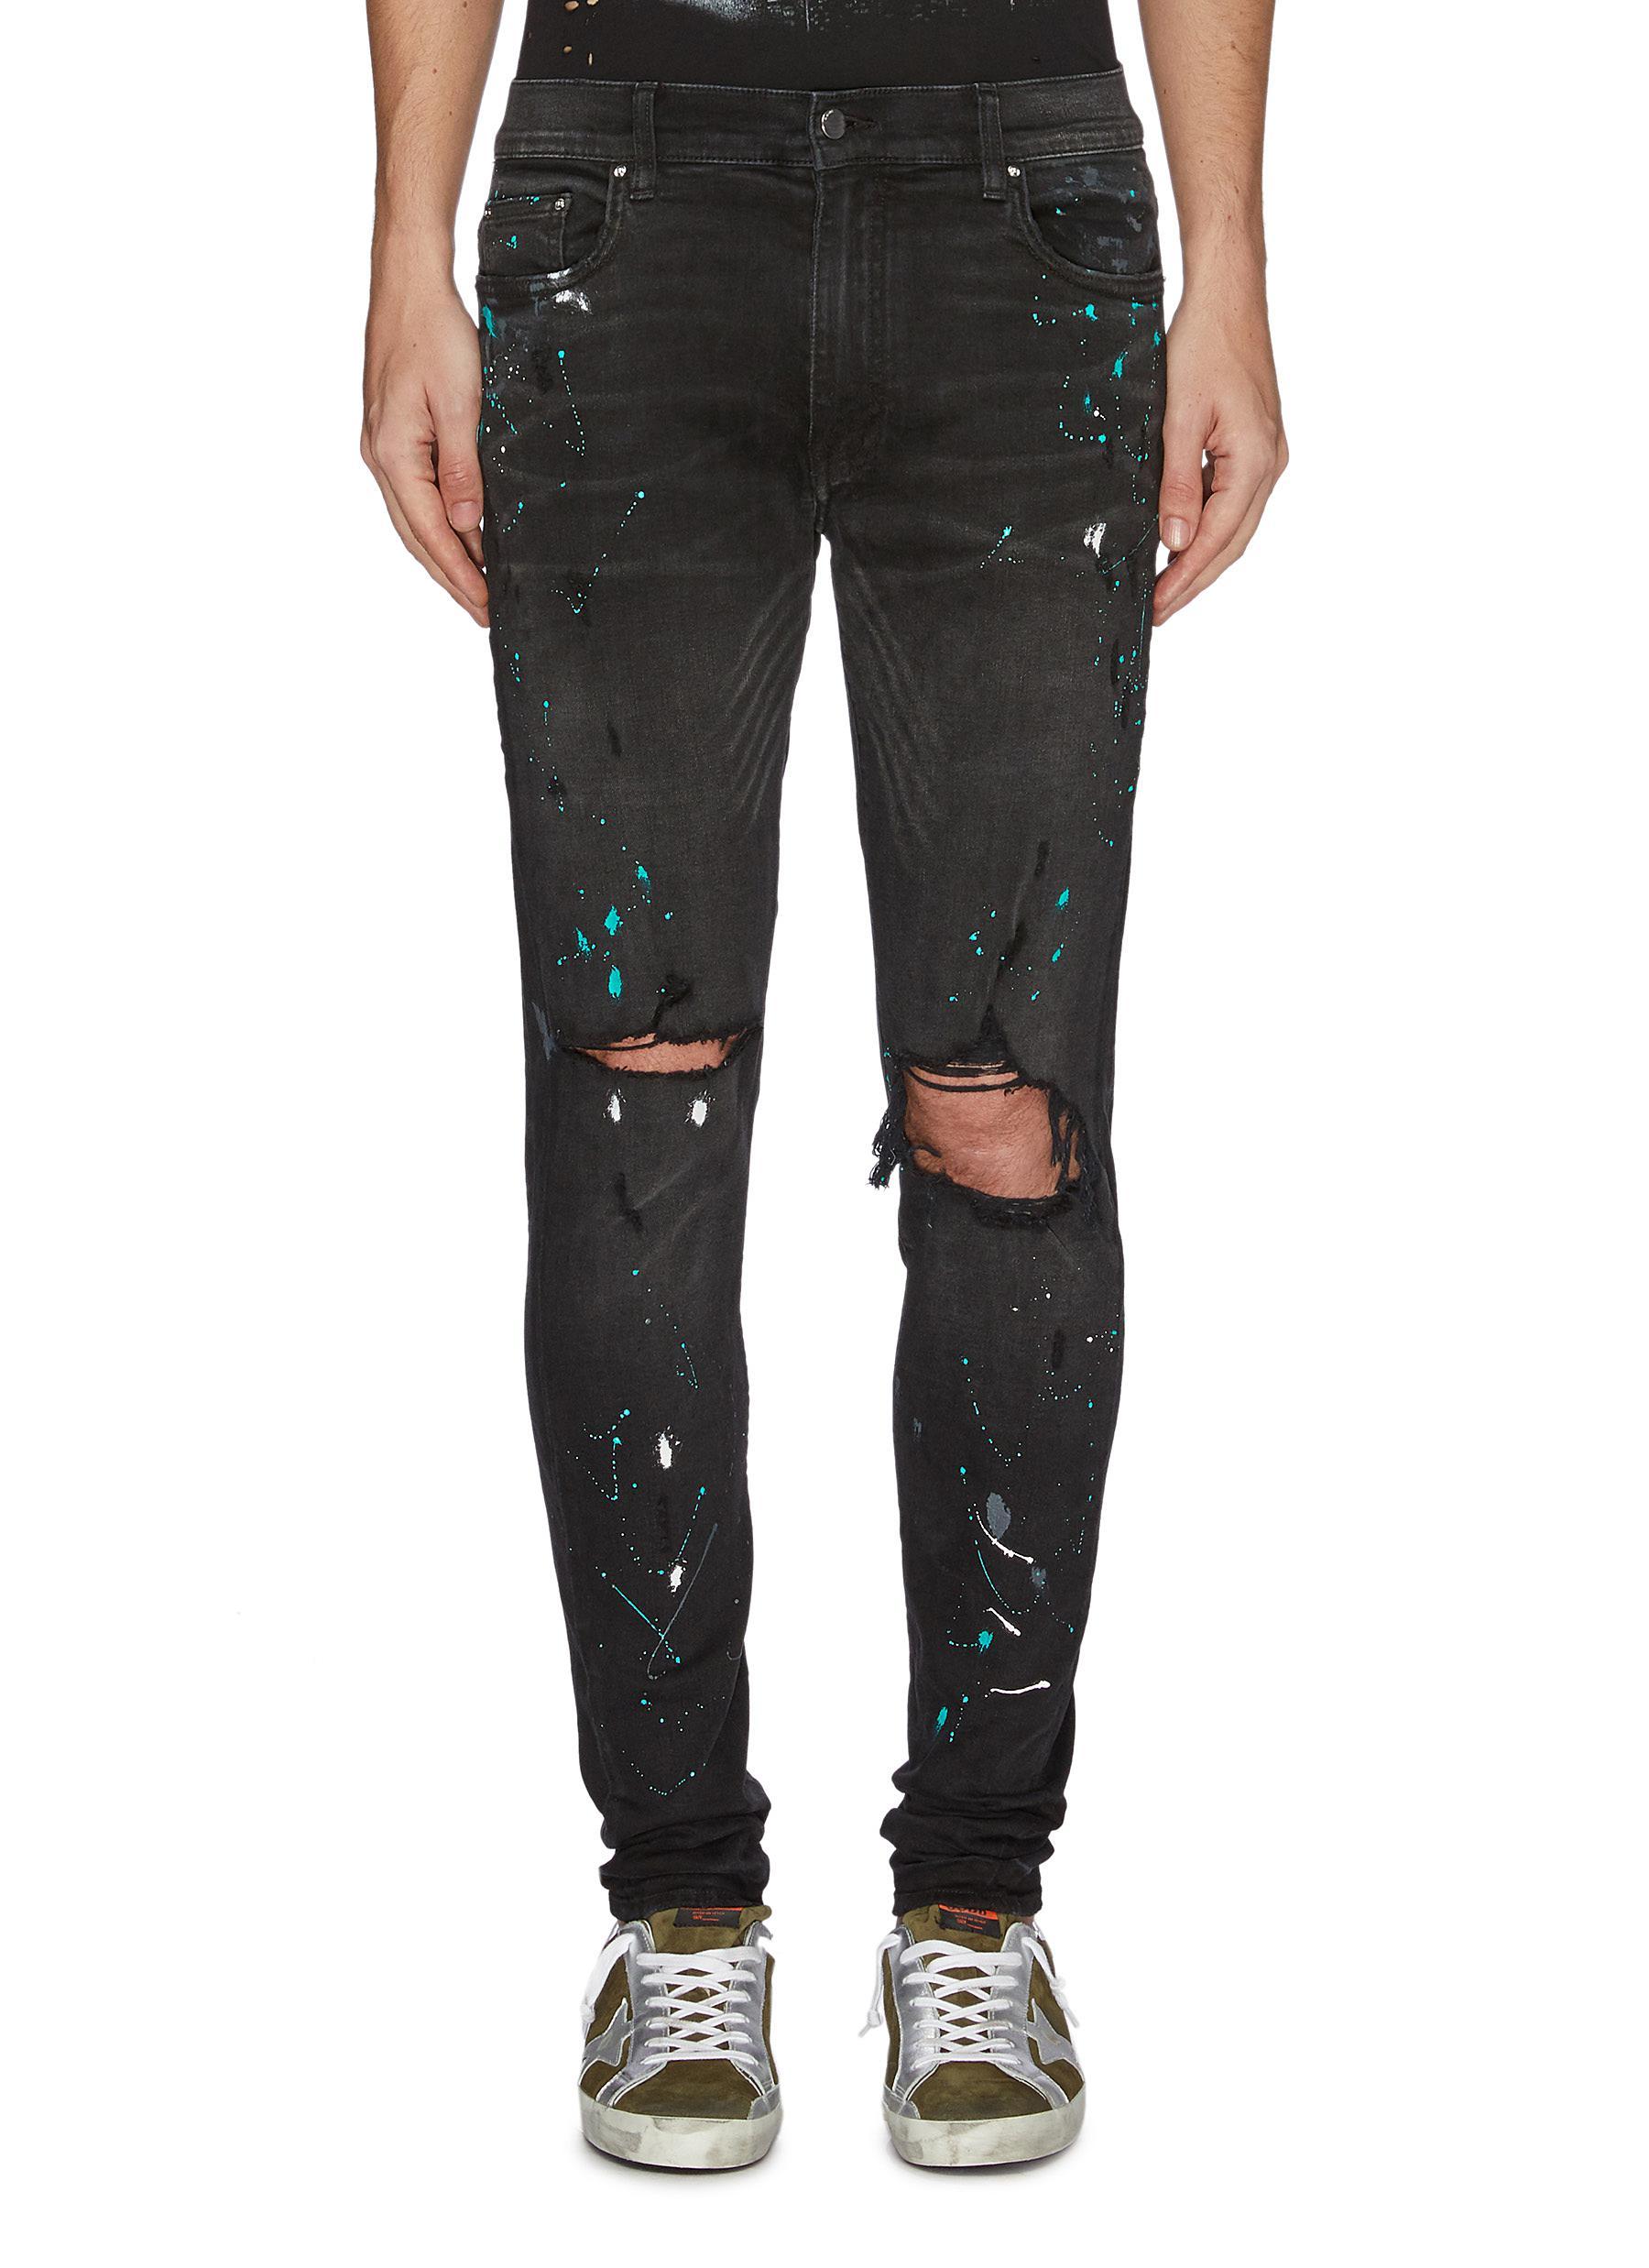 Amiri 'graffiti' Paint Splatter Print Ripped Jeans in Black for Men - Lyst